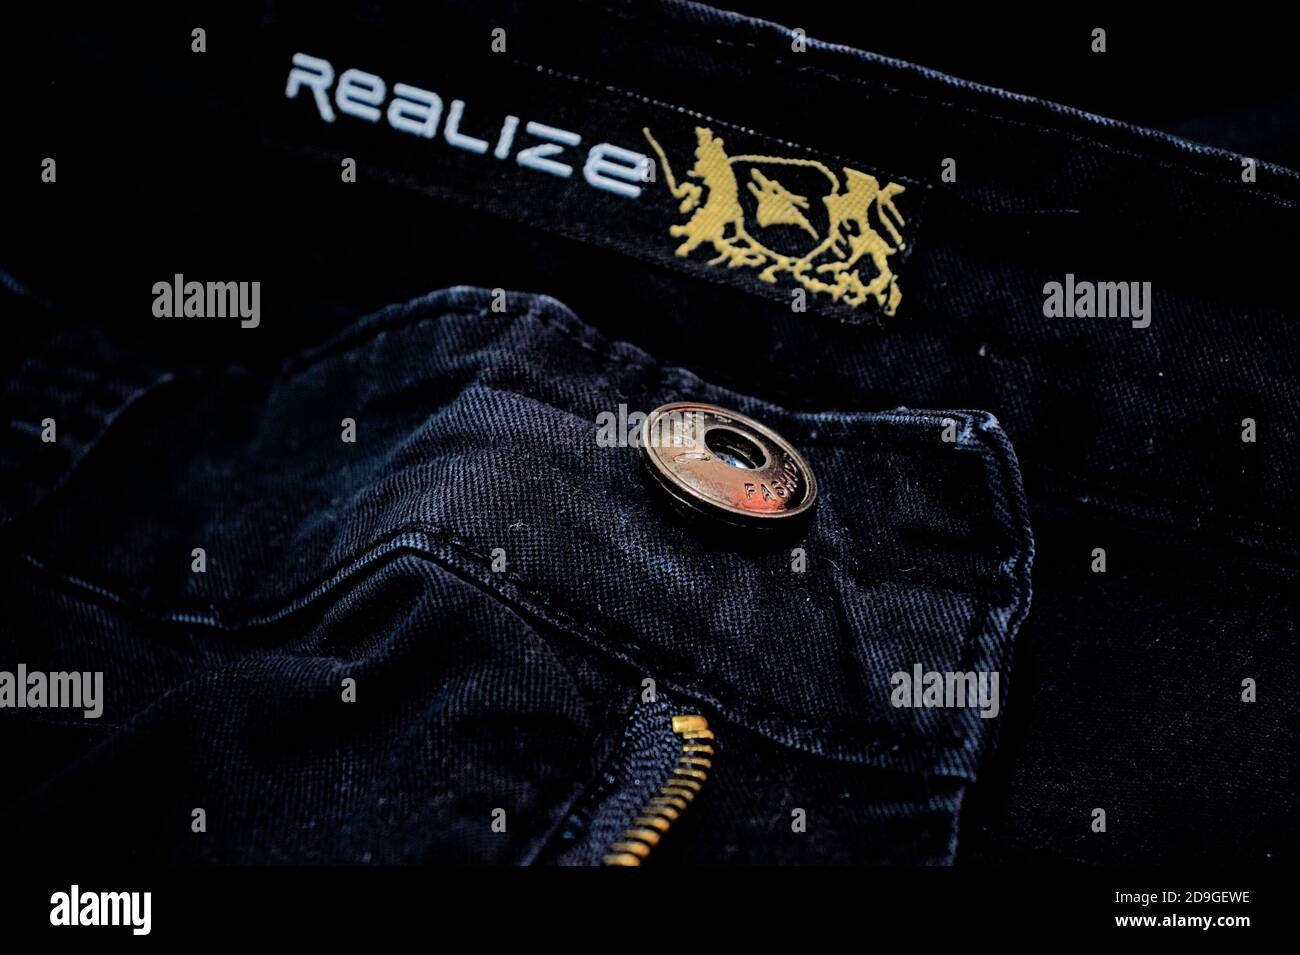 Jeans metal button Stock Photo - Alamy